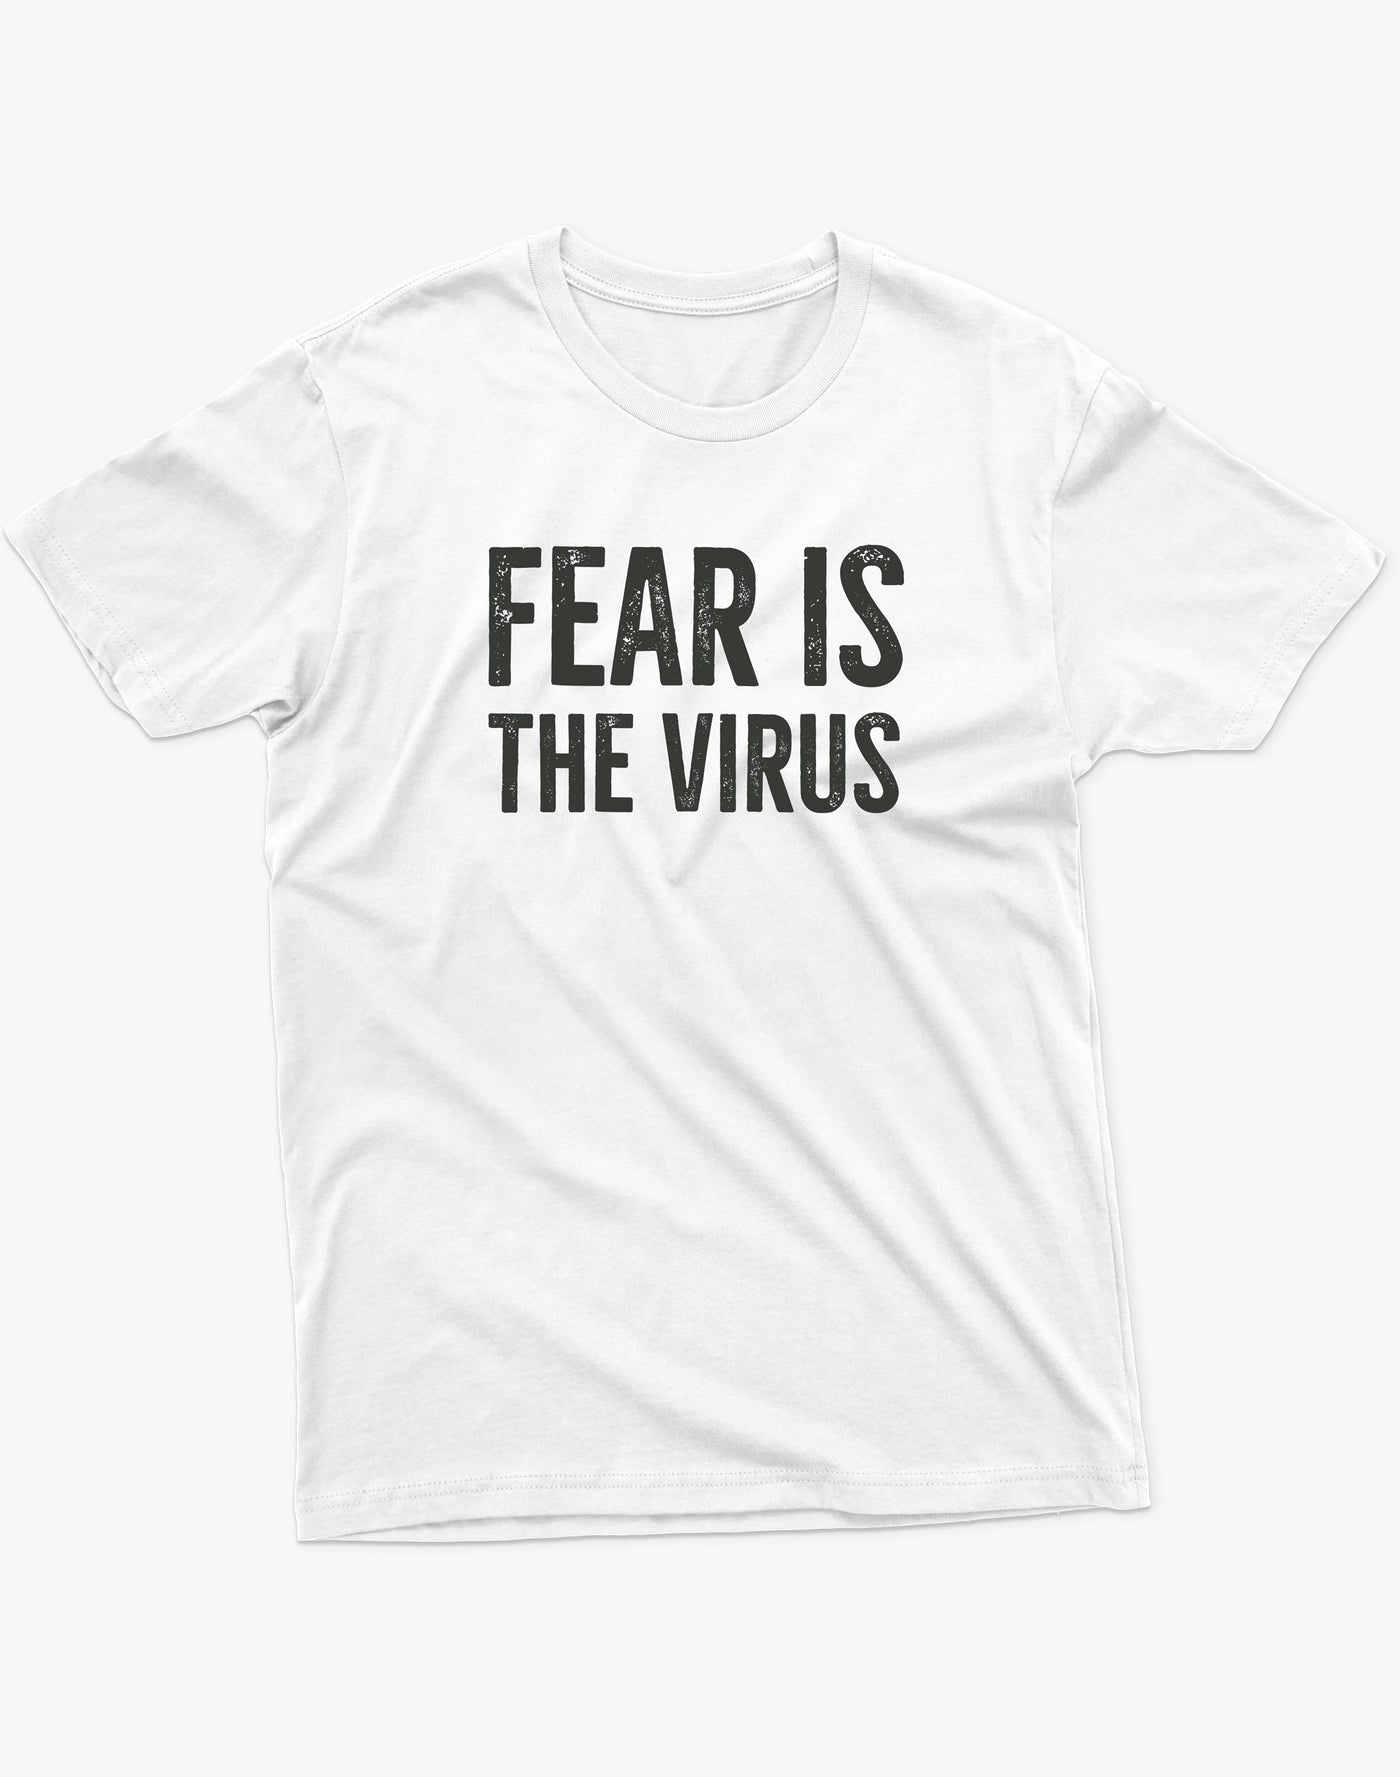 Mens/Unisex Fear is the Virus Tee